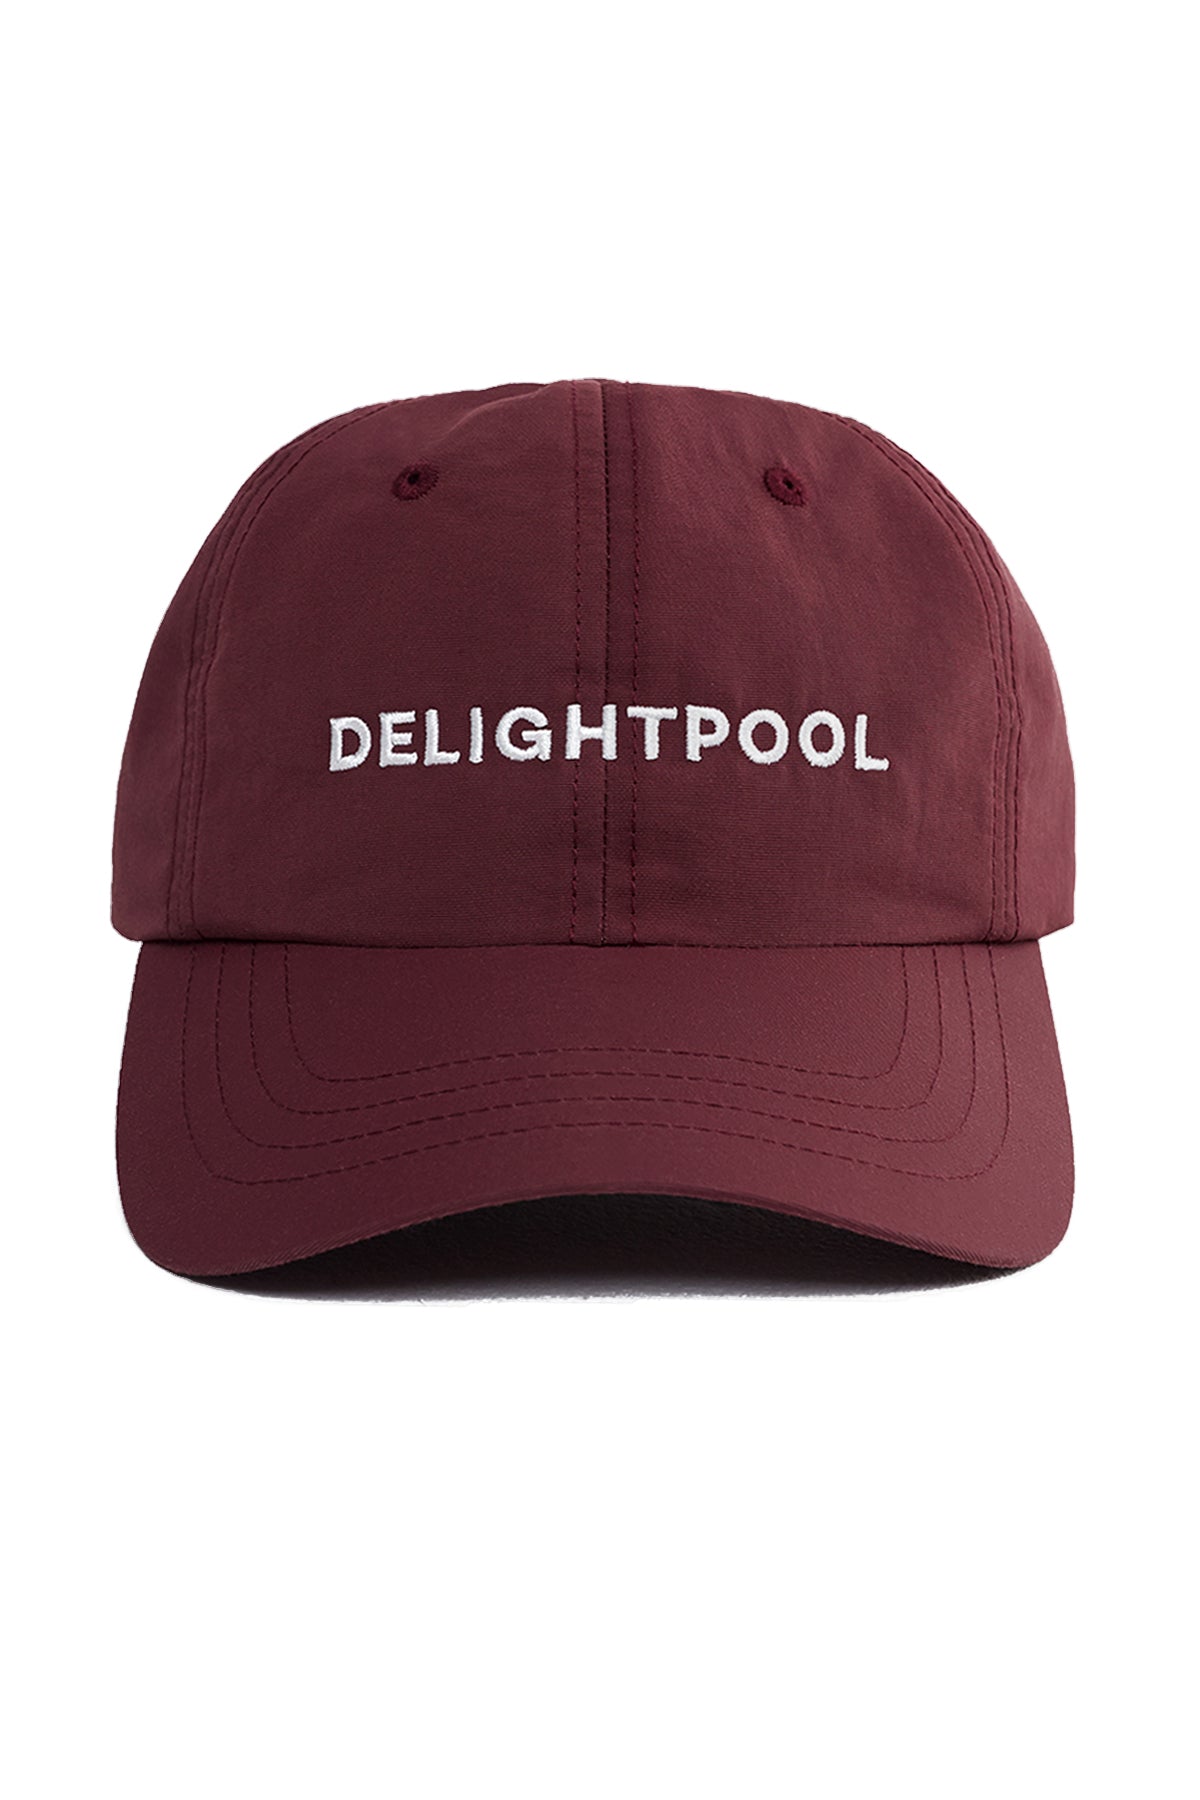 Delightpool Cap - Burgundy